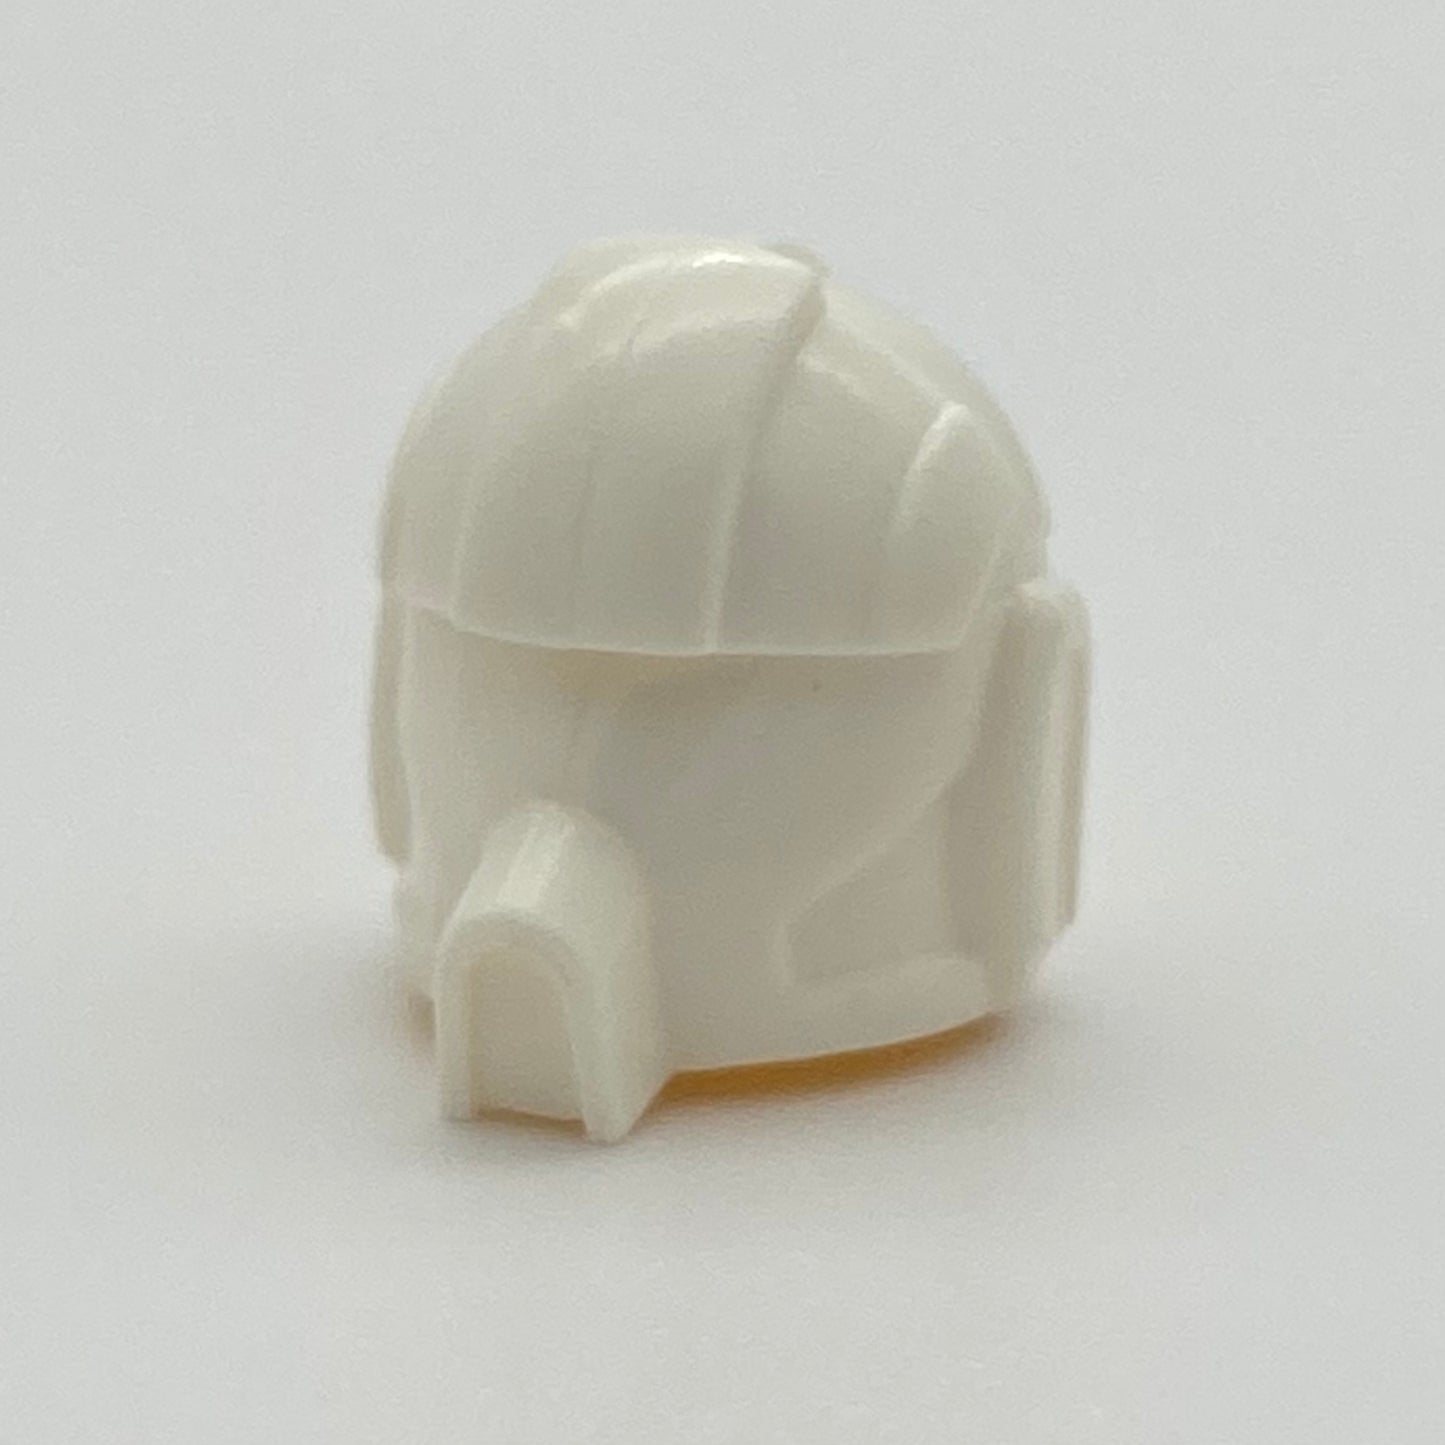 Blank Clone Pilot Helmet - LEGO Custom Helmet